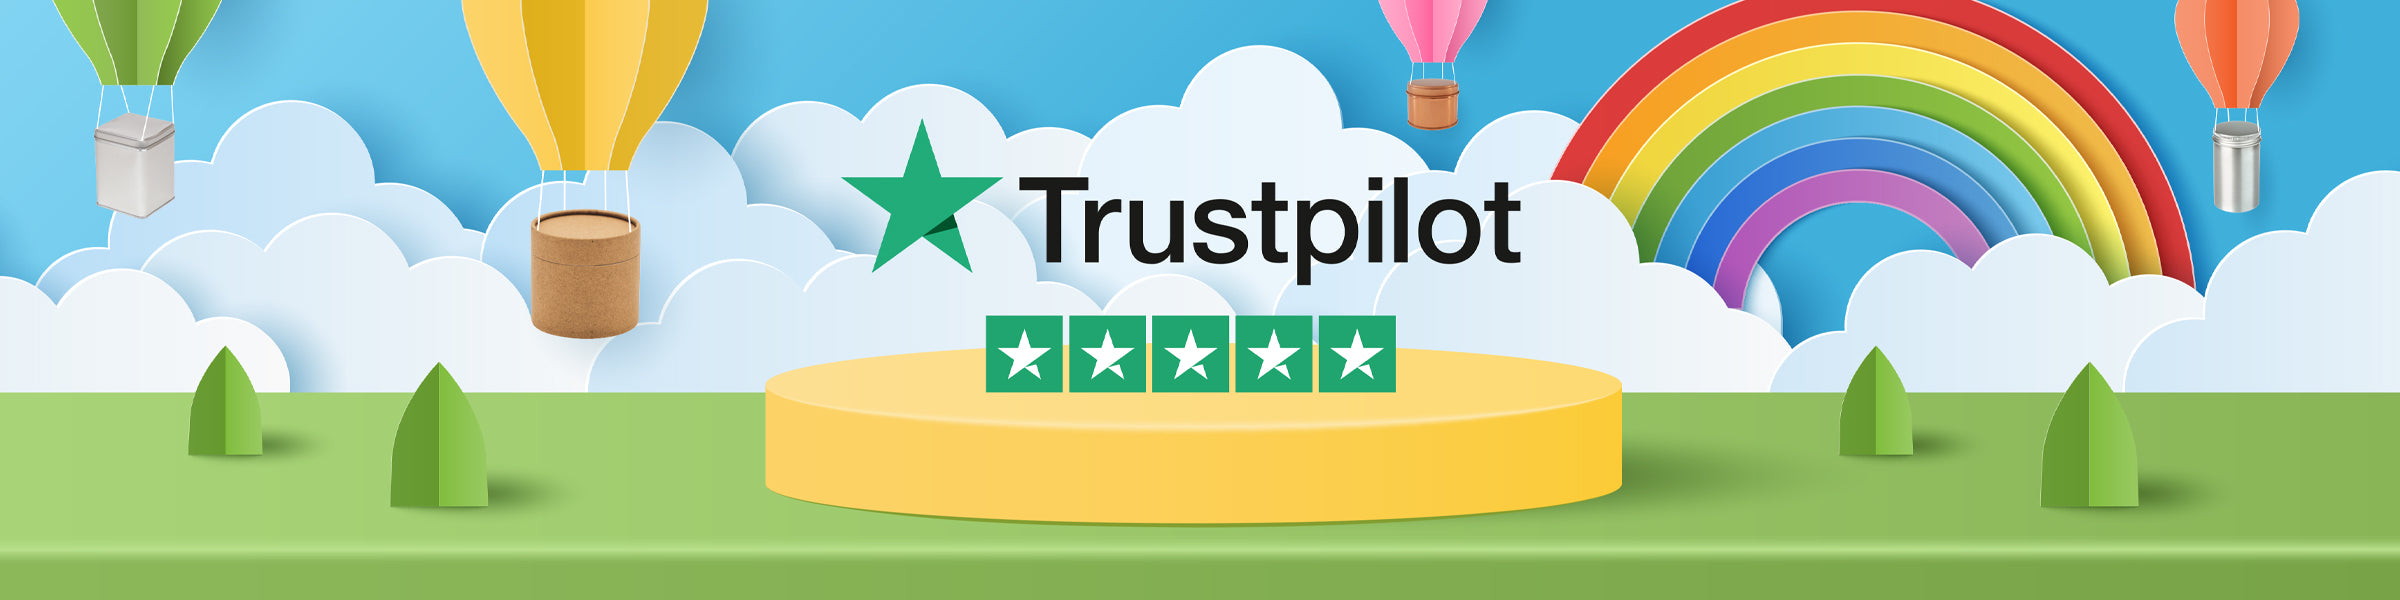 Trustpilot vijf sterren rating omringd door blikjes en kartonnen kokers geleverd via luchtballon.